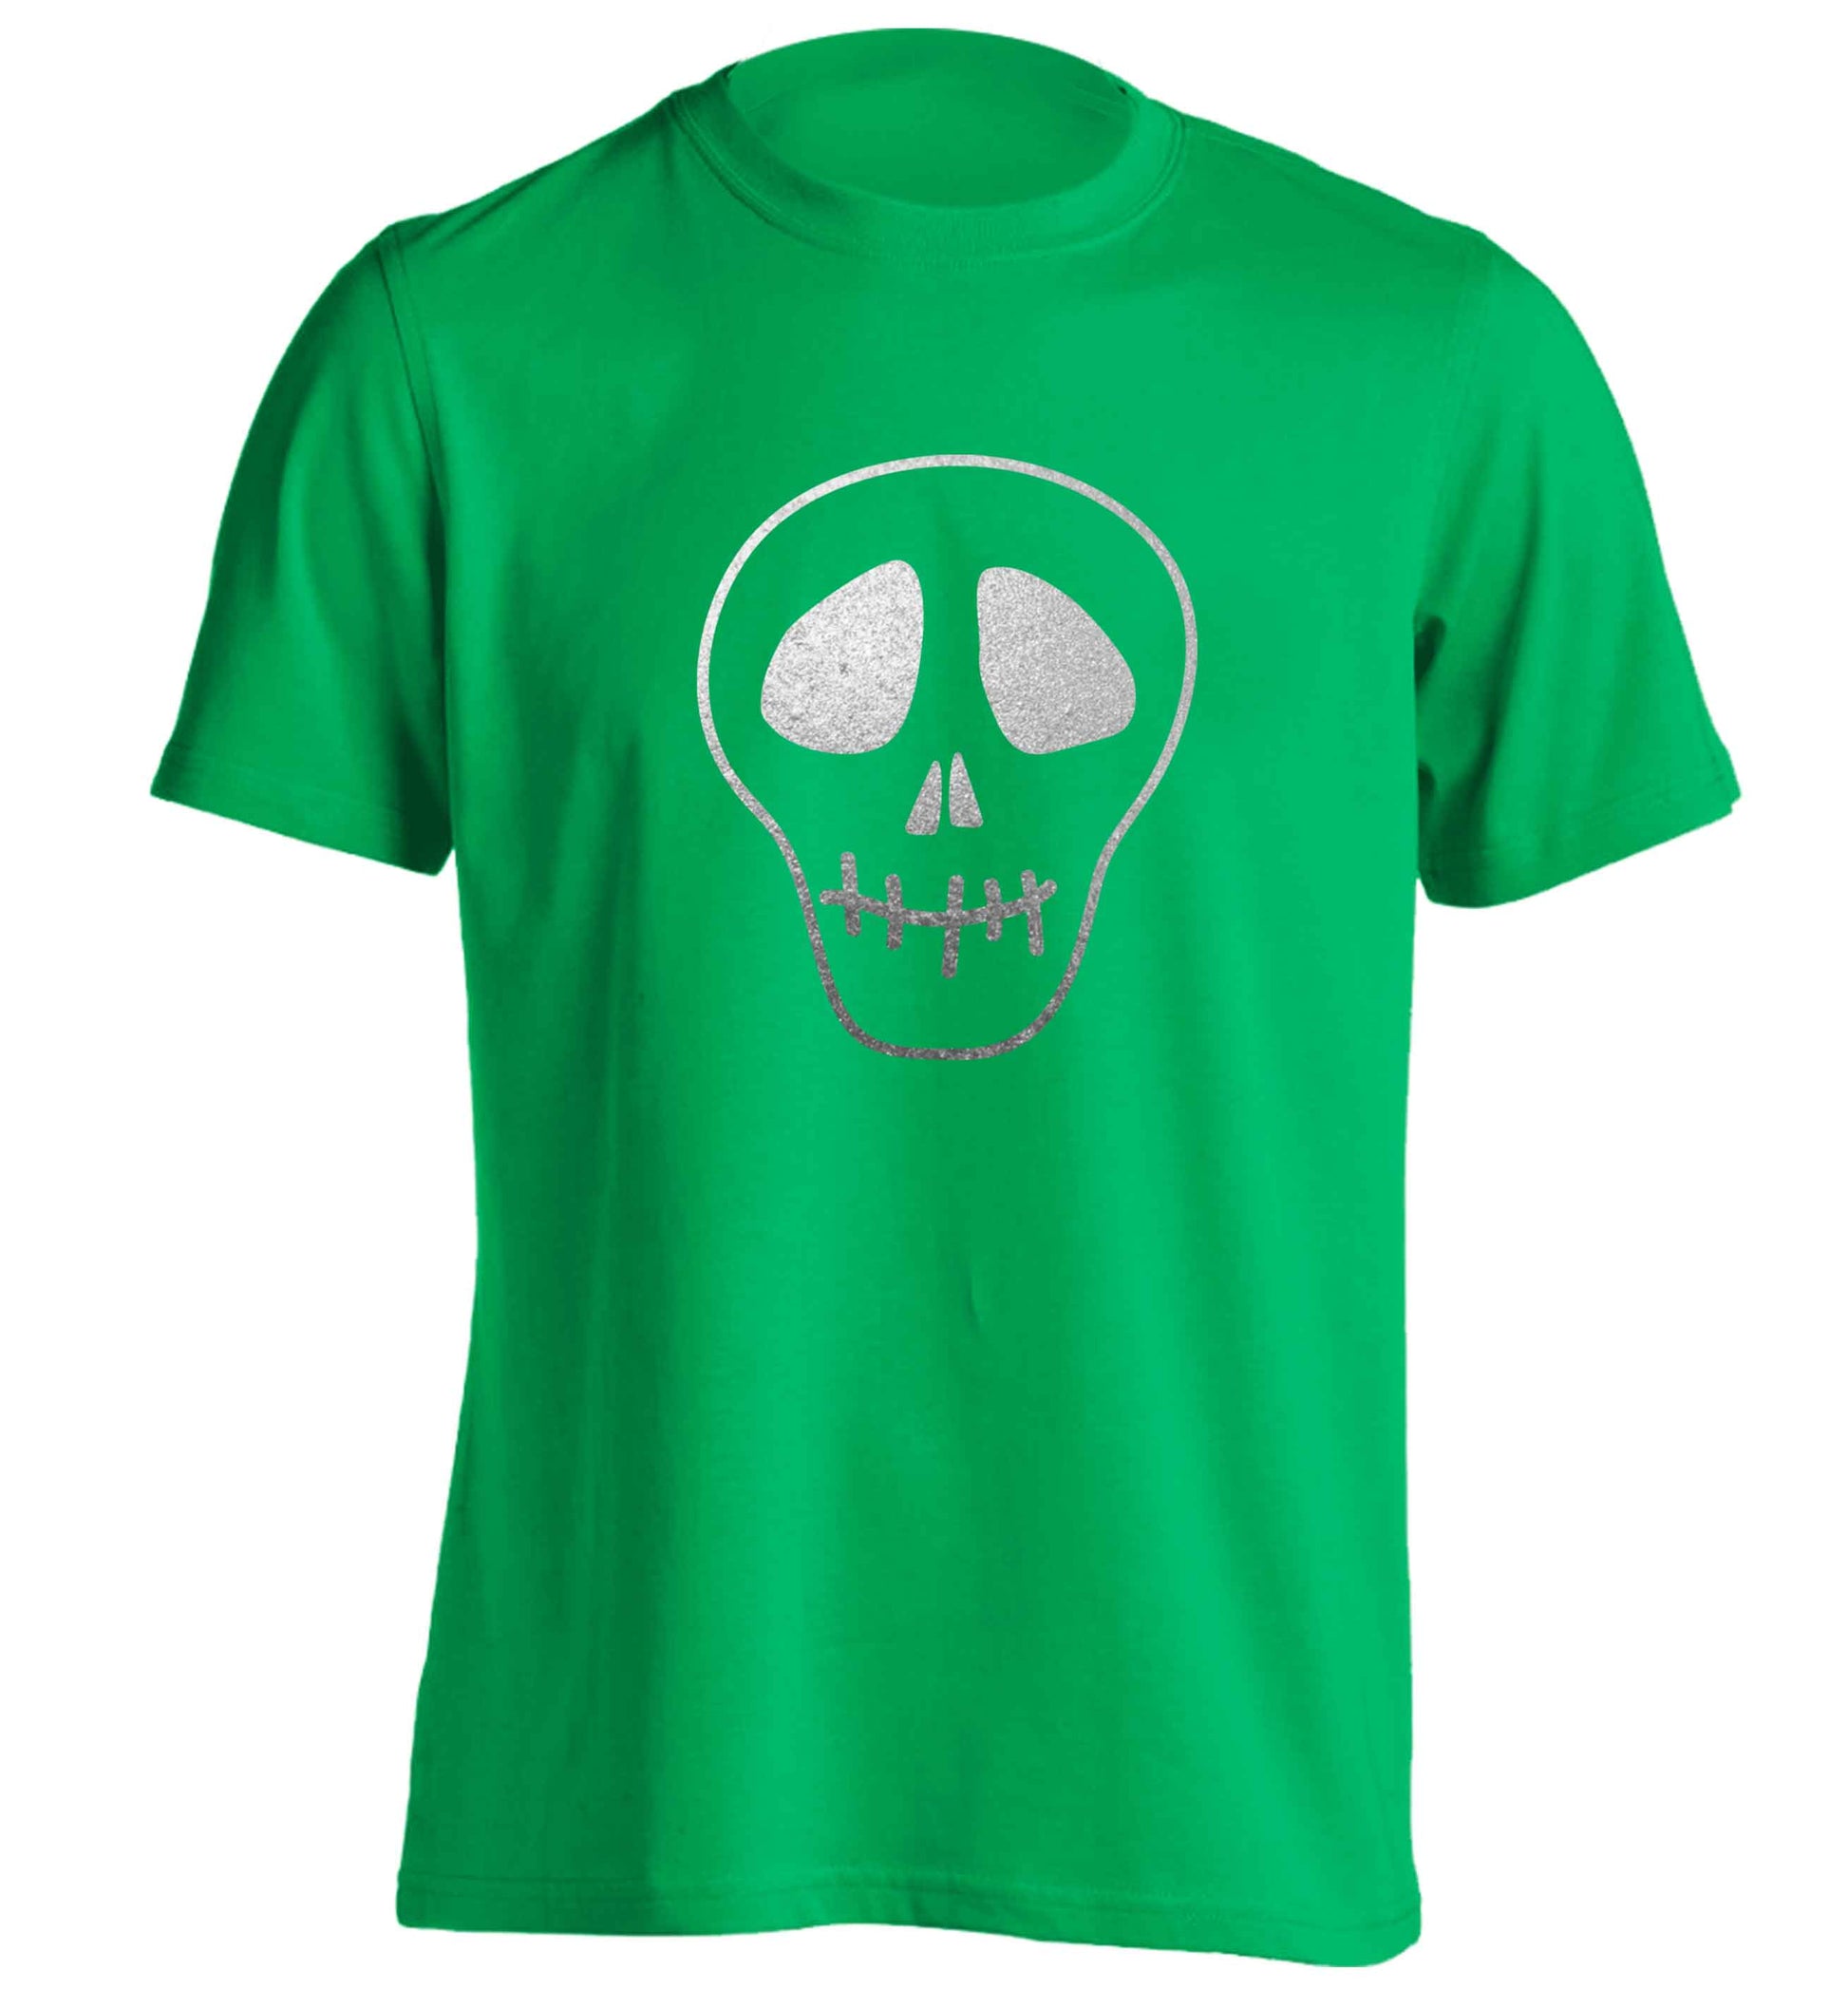 Metallic silver skull adults unisex green Tshirt 2XL